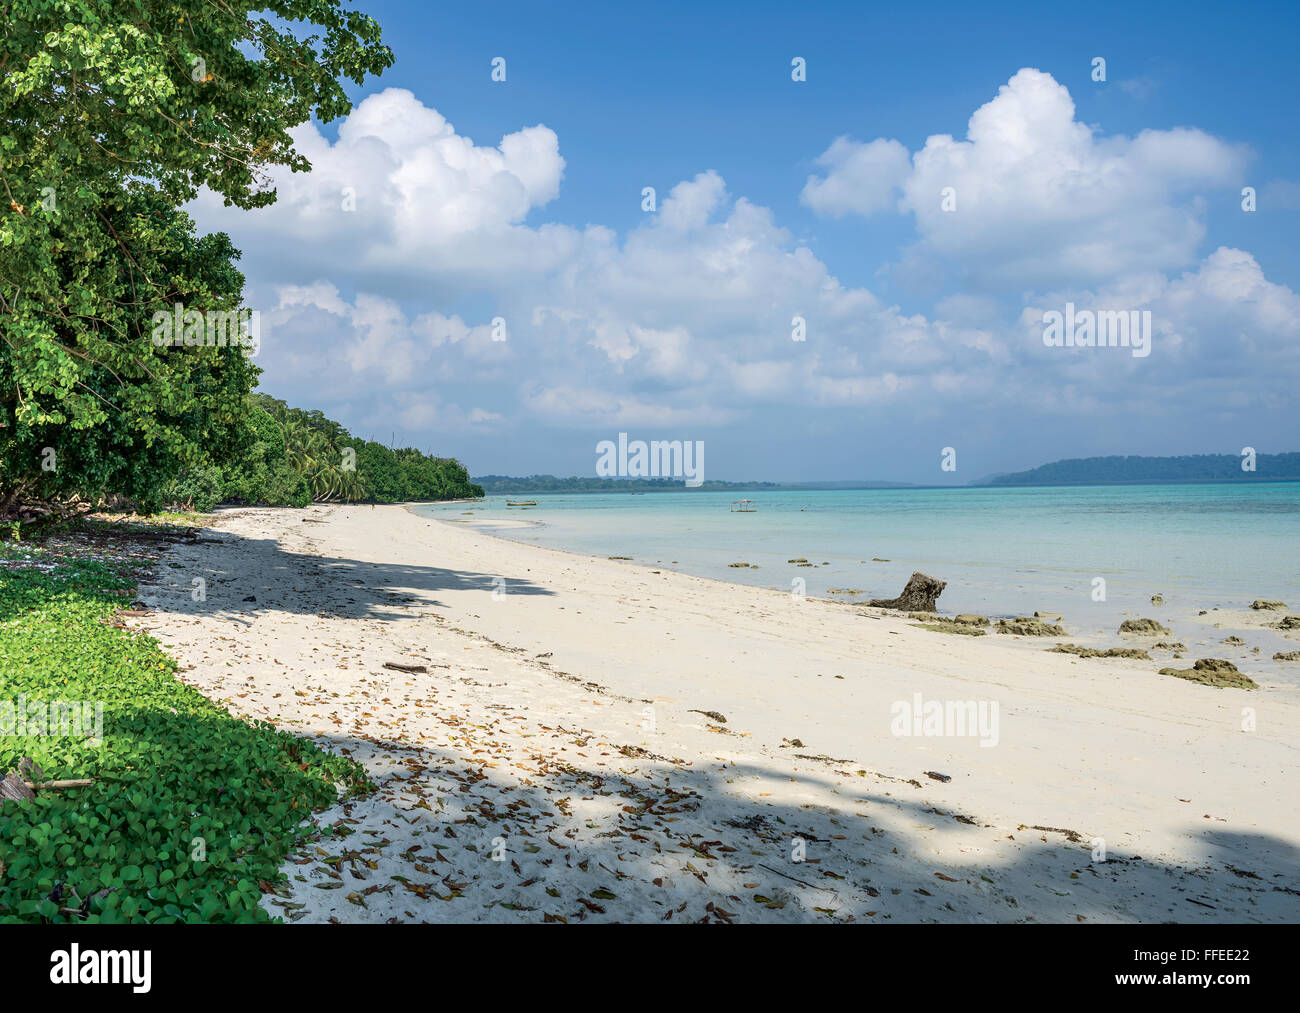 A portion of Vijay Nagar beach in Havelock island, Andaman, India Stock Photo